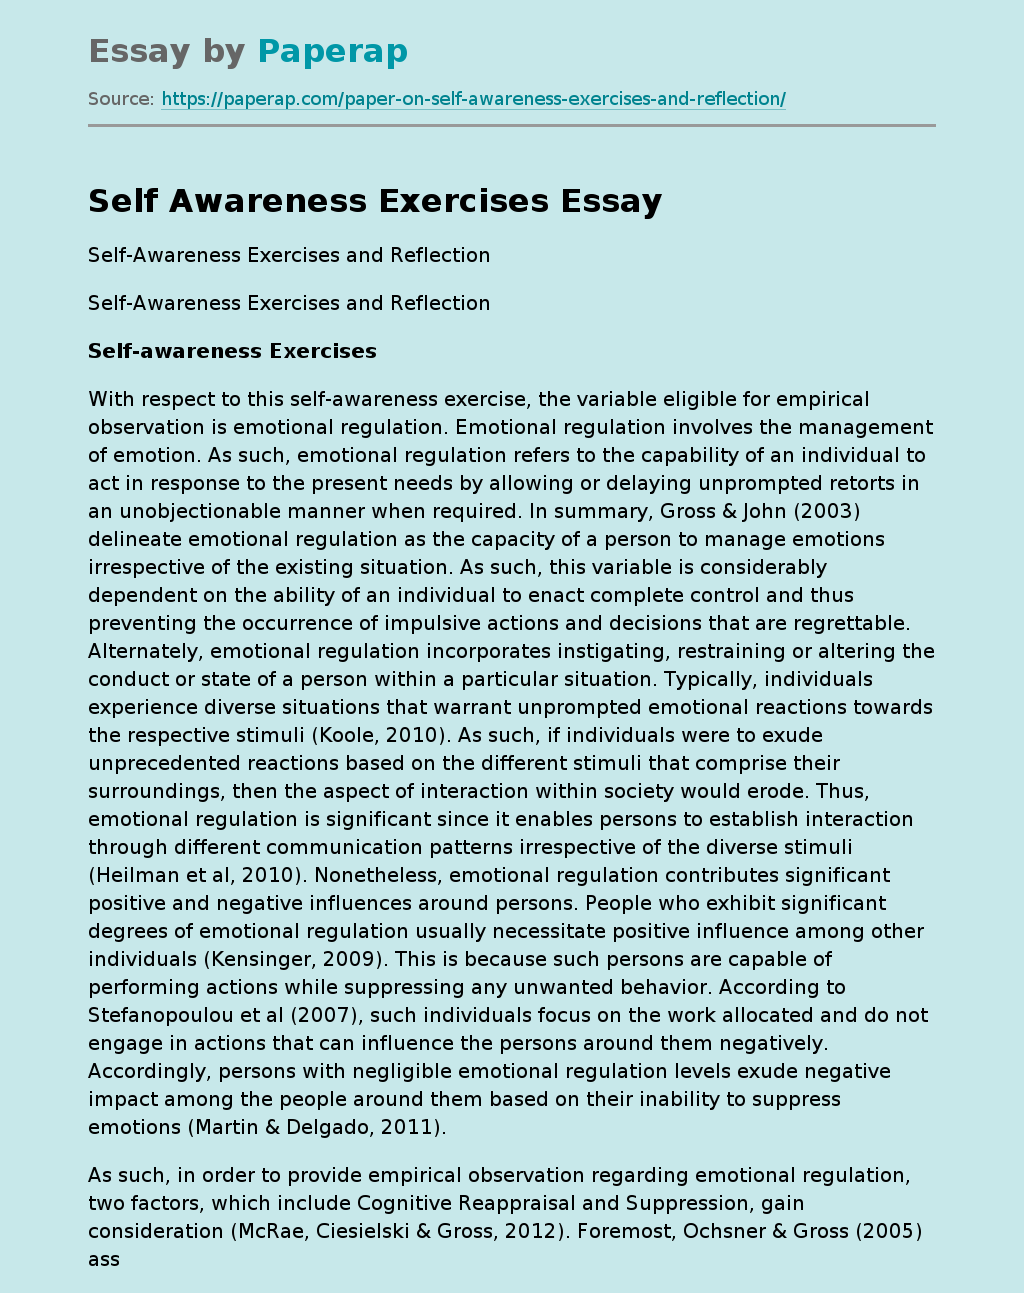 Self Awareness Exercises Reflection